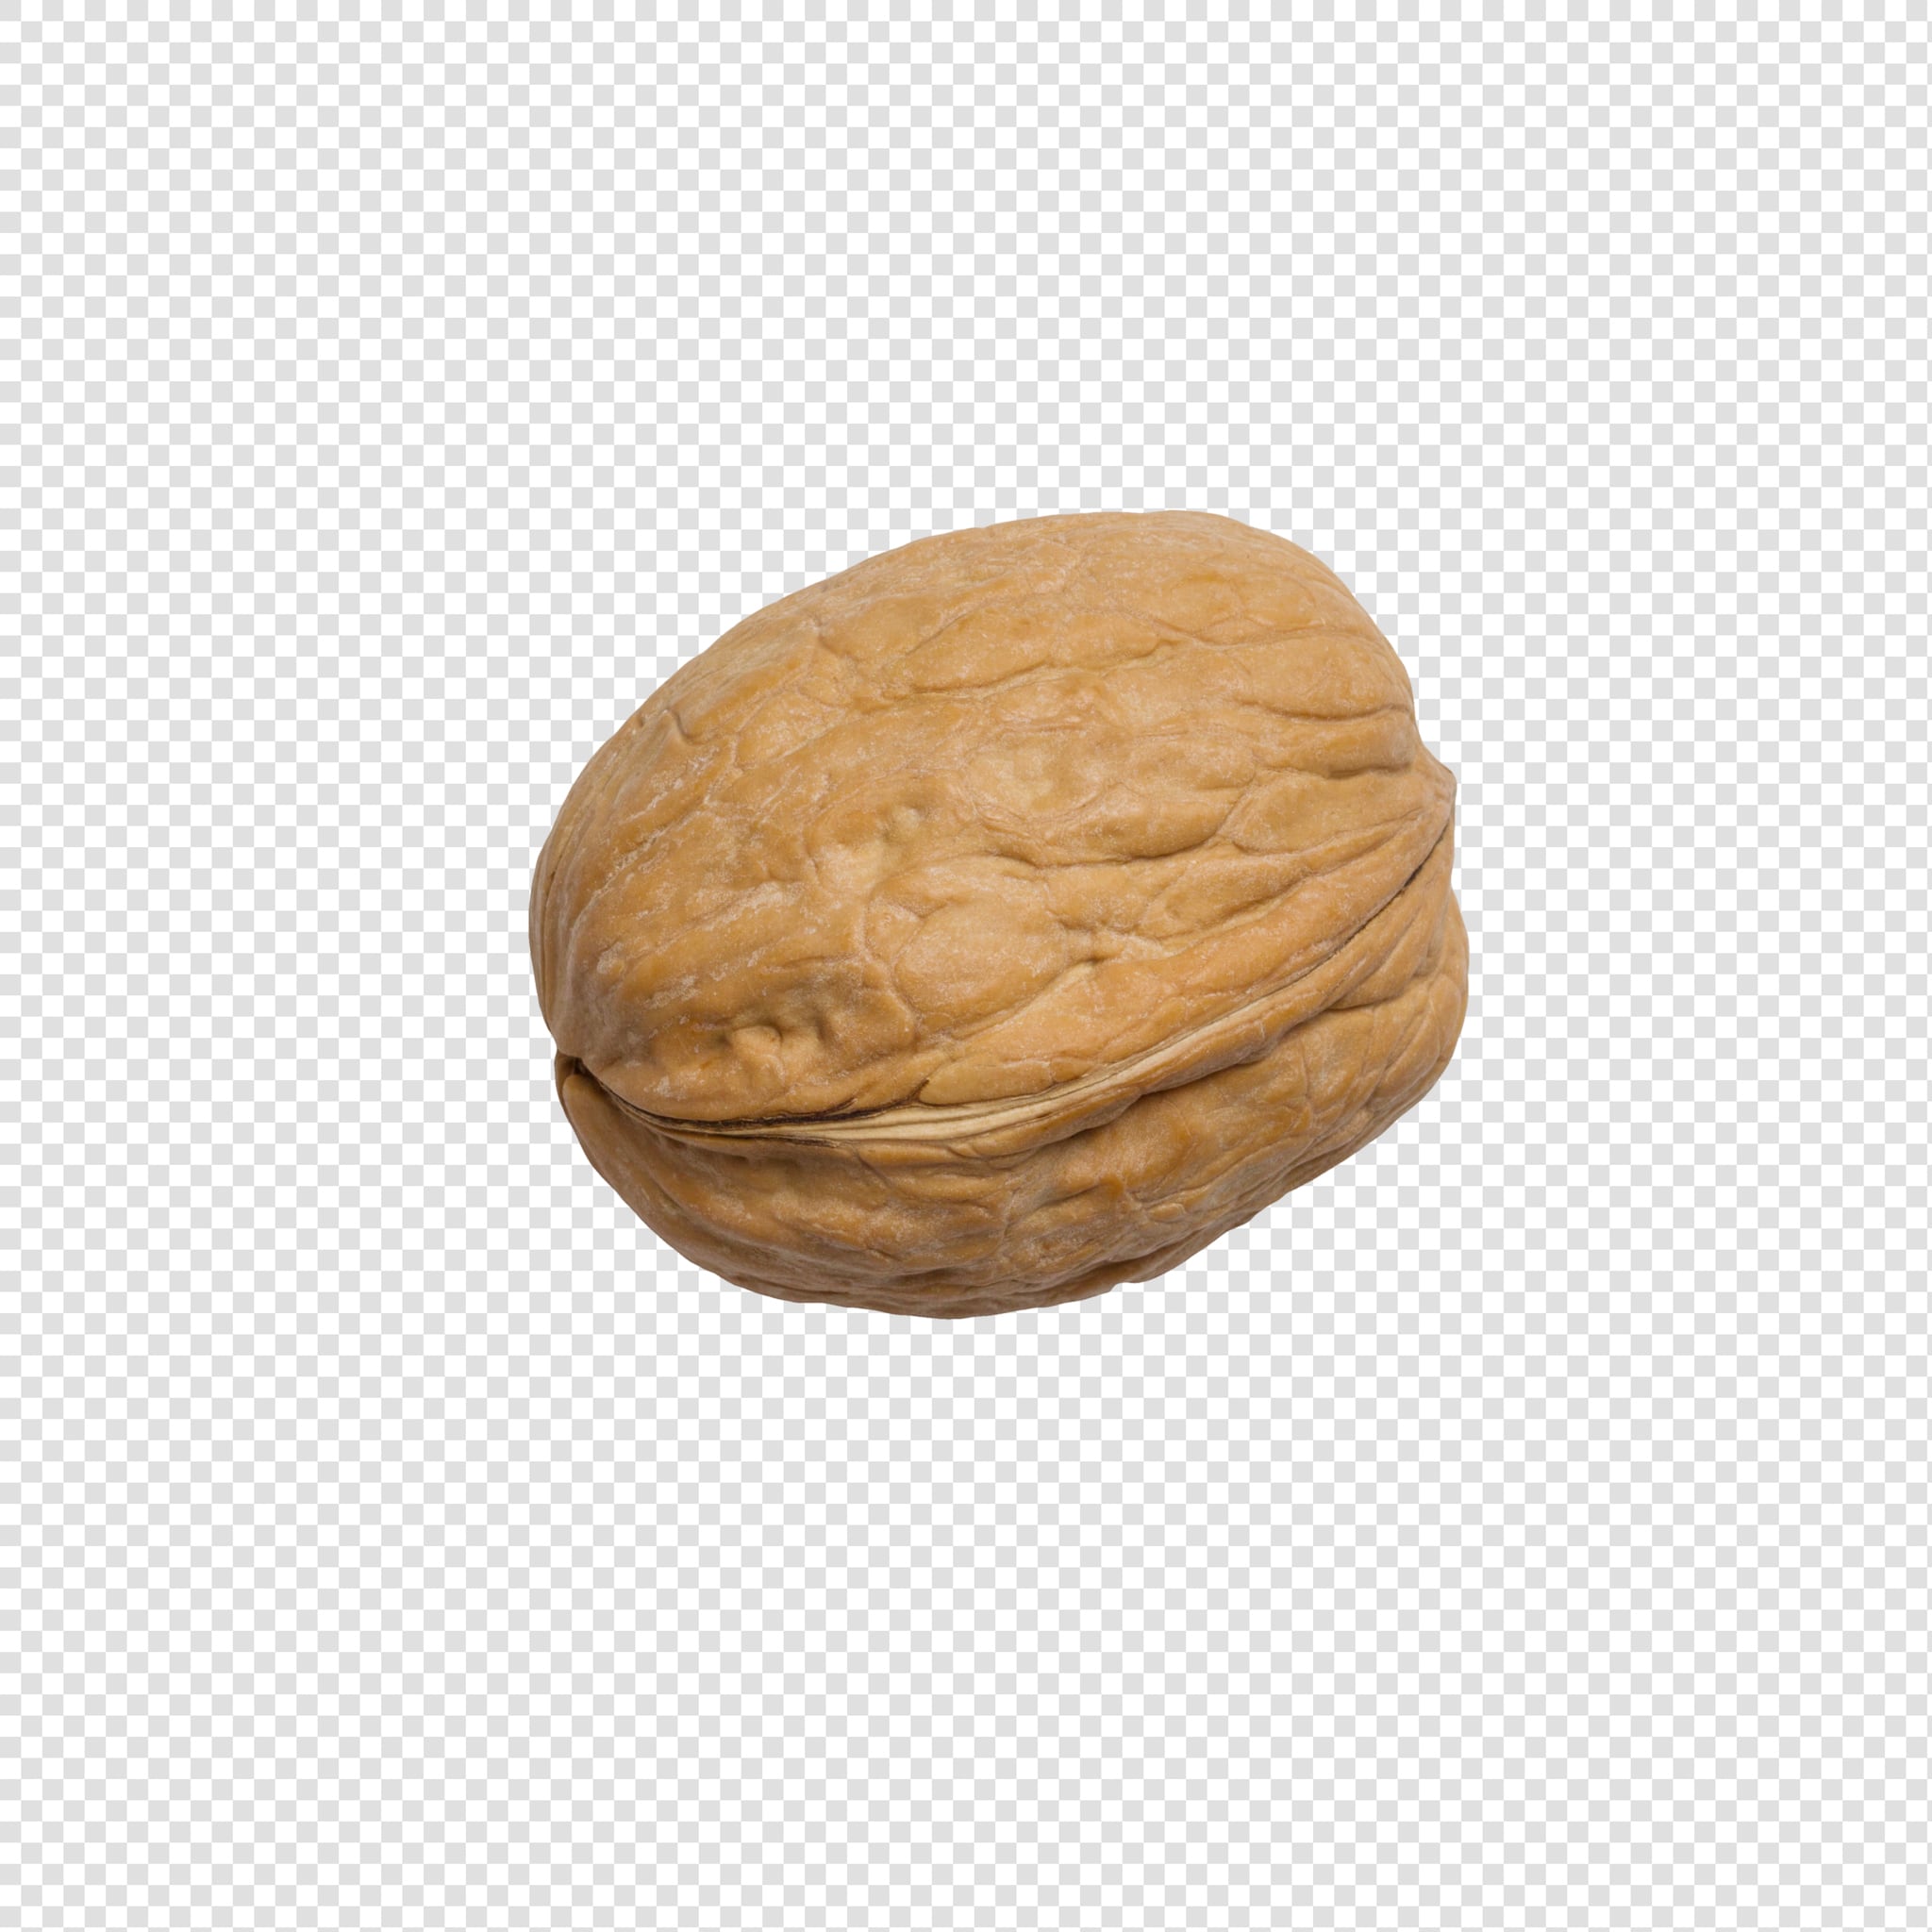 Walnut image asset with transparent background